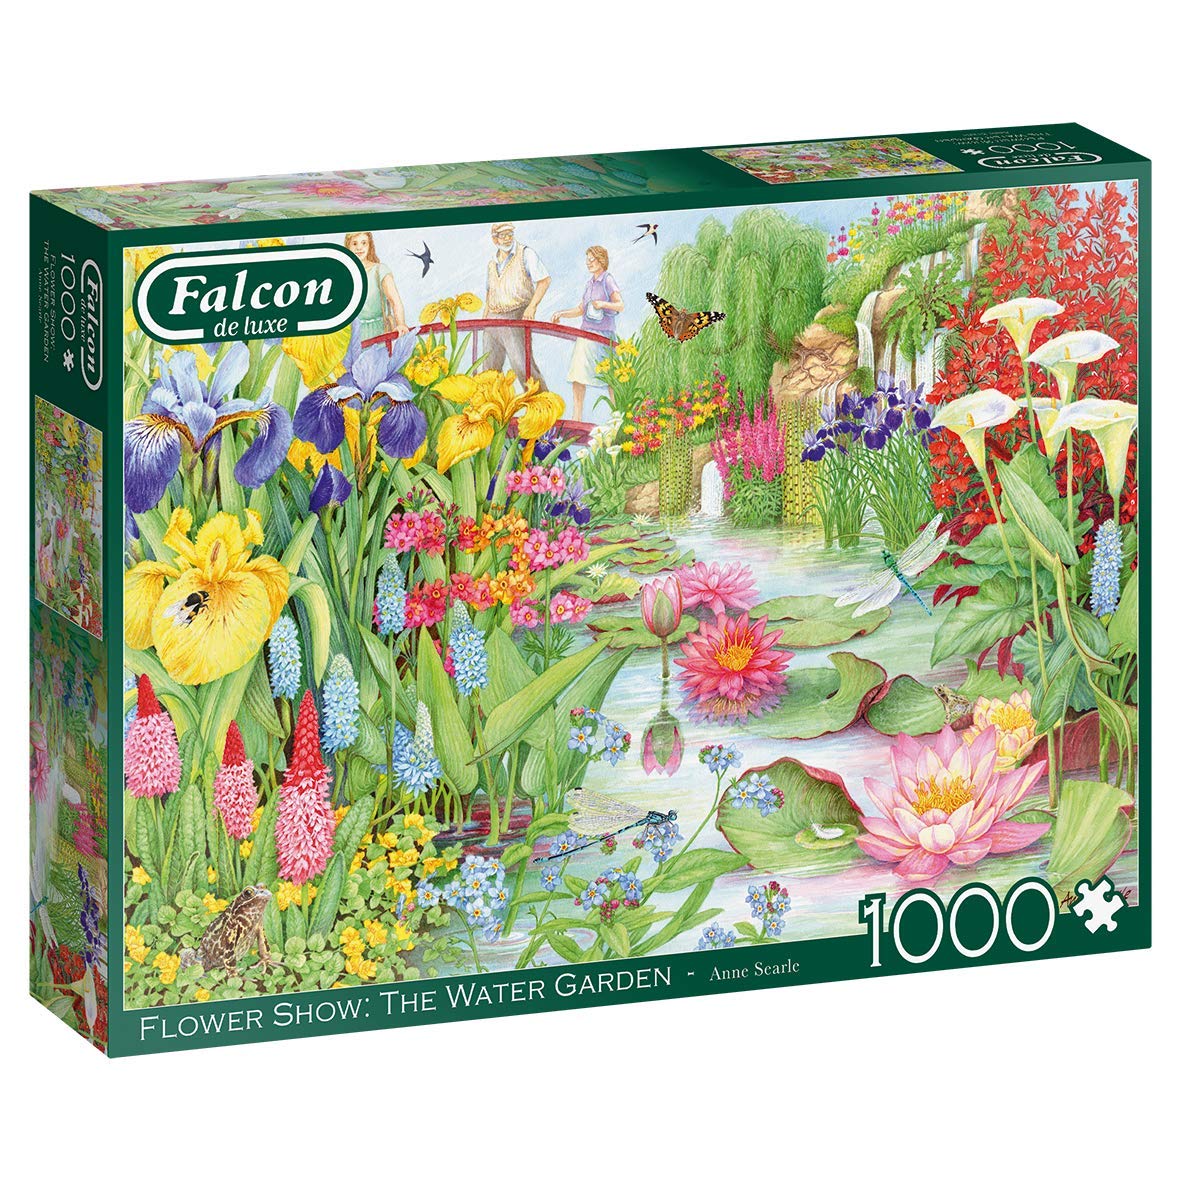 Falcon De Luxe - Flower Show 'The Water Gardens' - 1000 Piece Jigsaw Puzzle